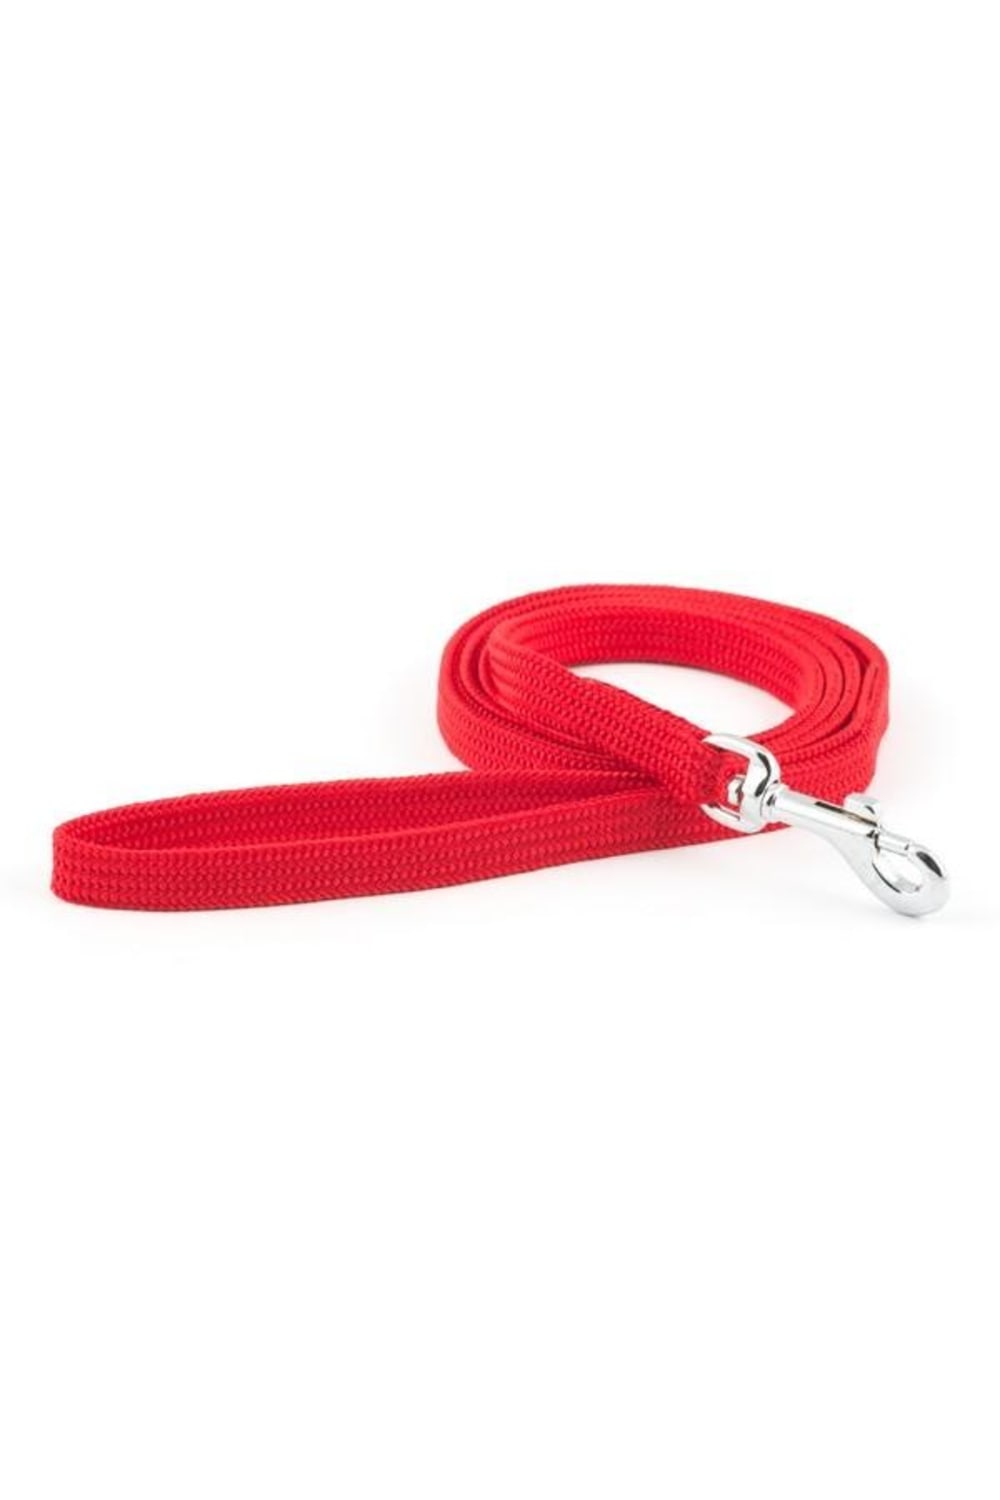 Ancol Softweave Dog Leash (Red) (1 Yard x 0.39in)